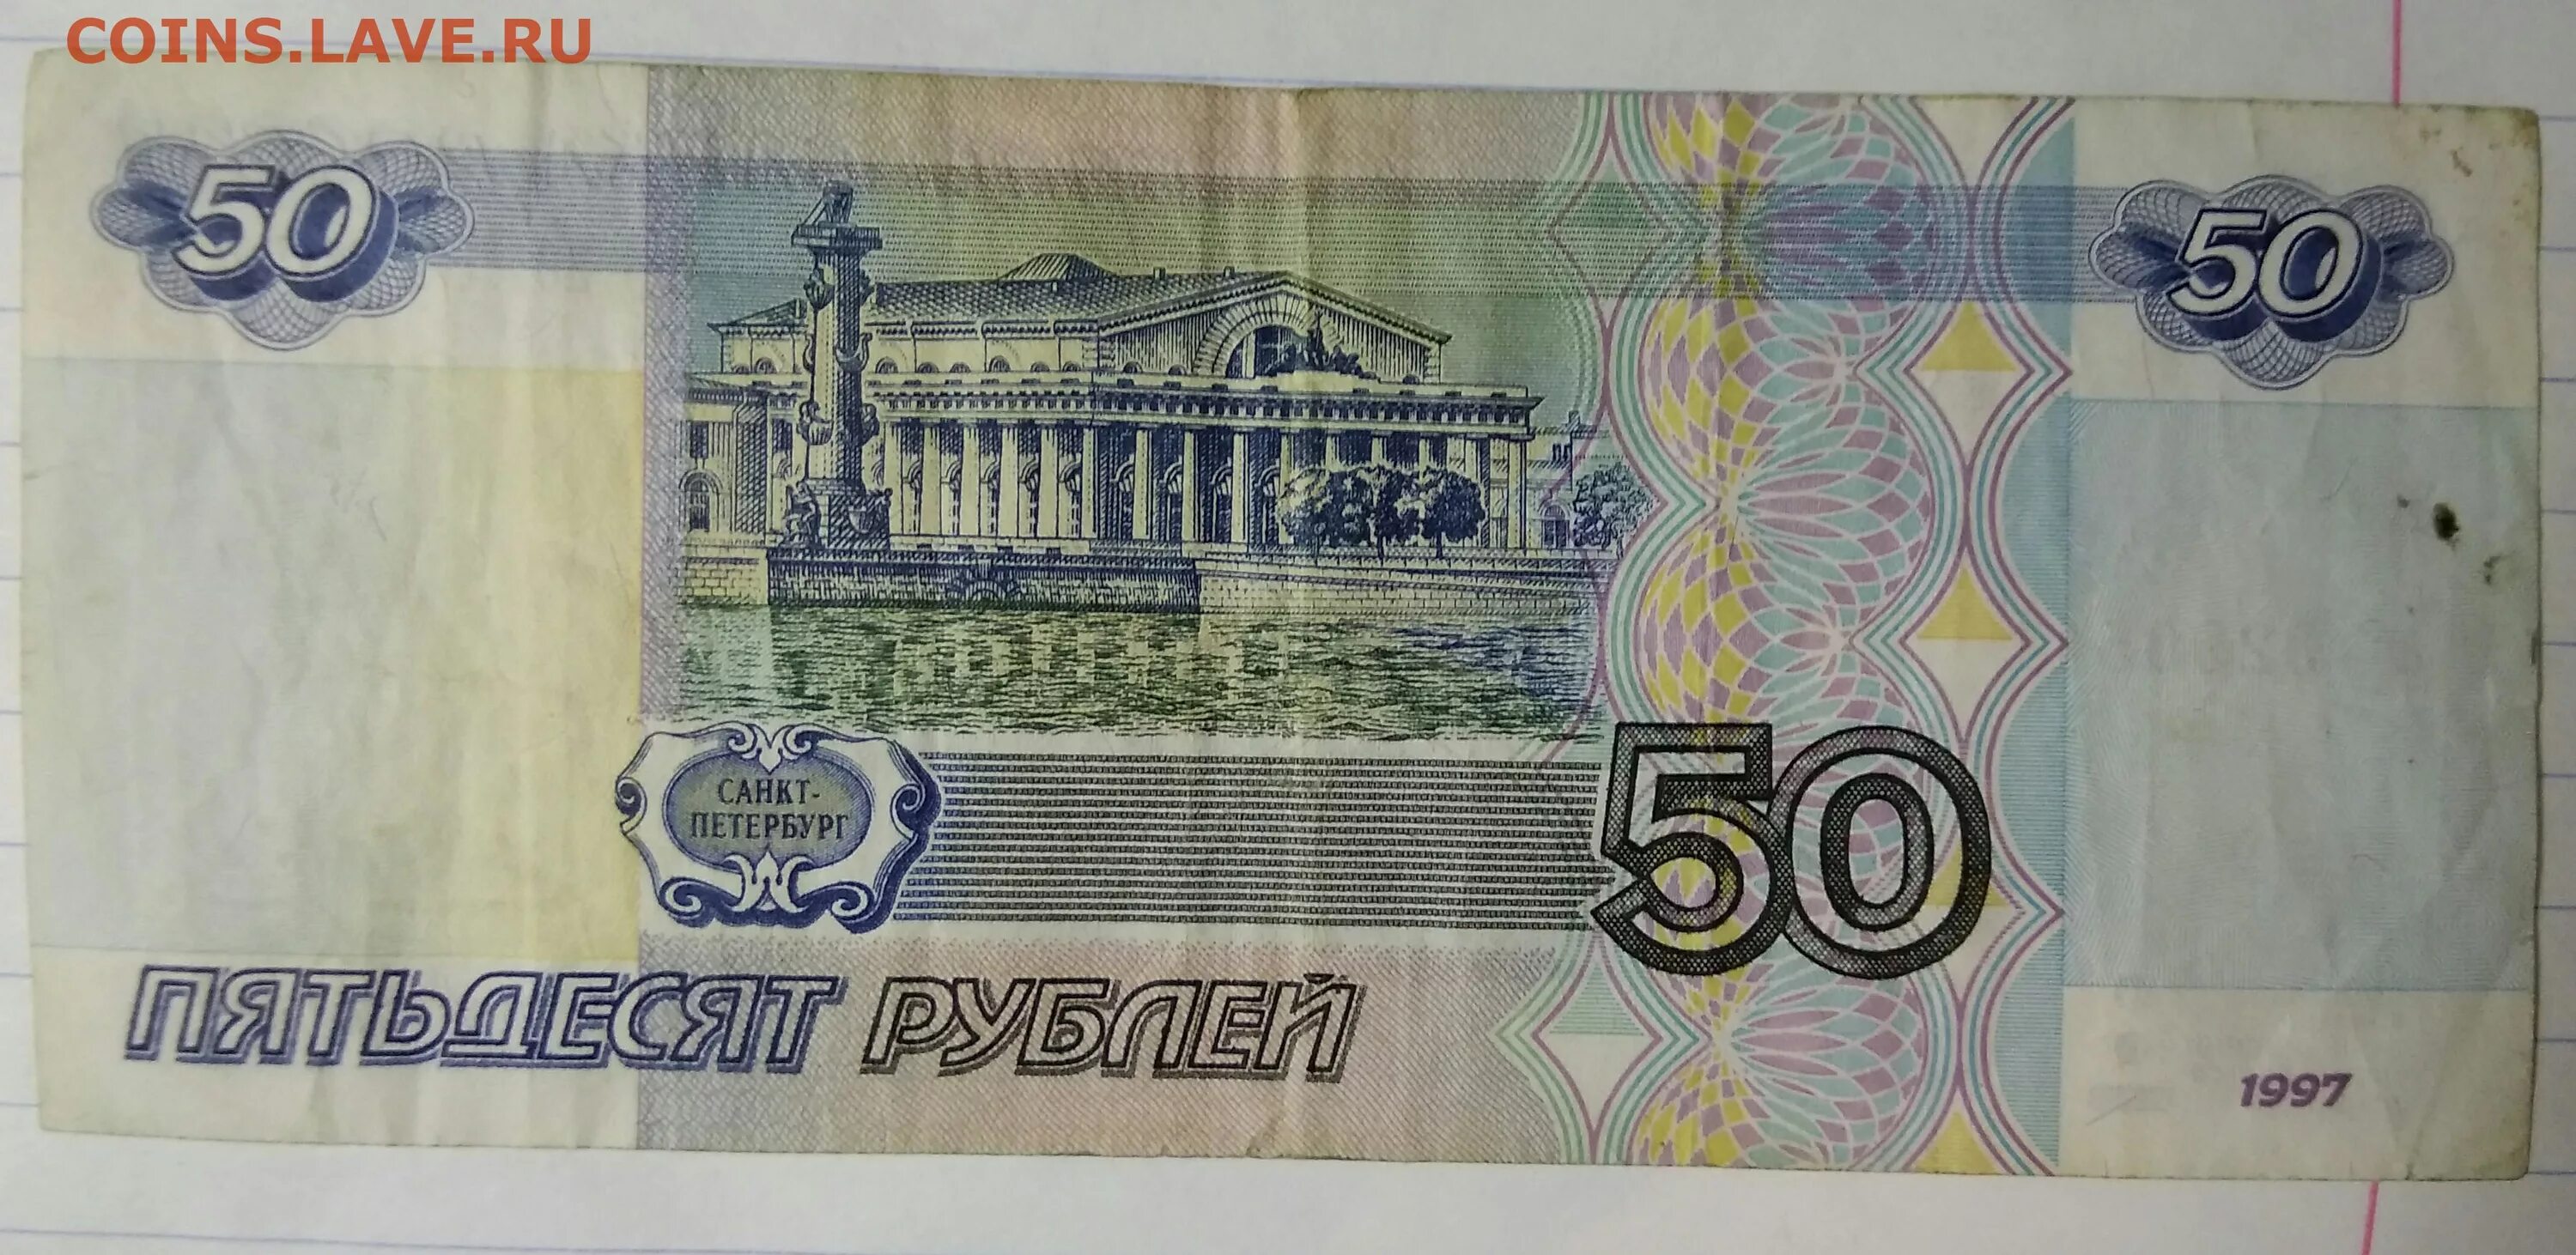 Какие 50 рублей. 50 Рублей. 50 Рублей 1997. Пятьдесят рублей 1997. 50 Рублей 1997 без модификации.